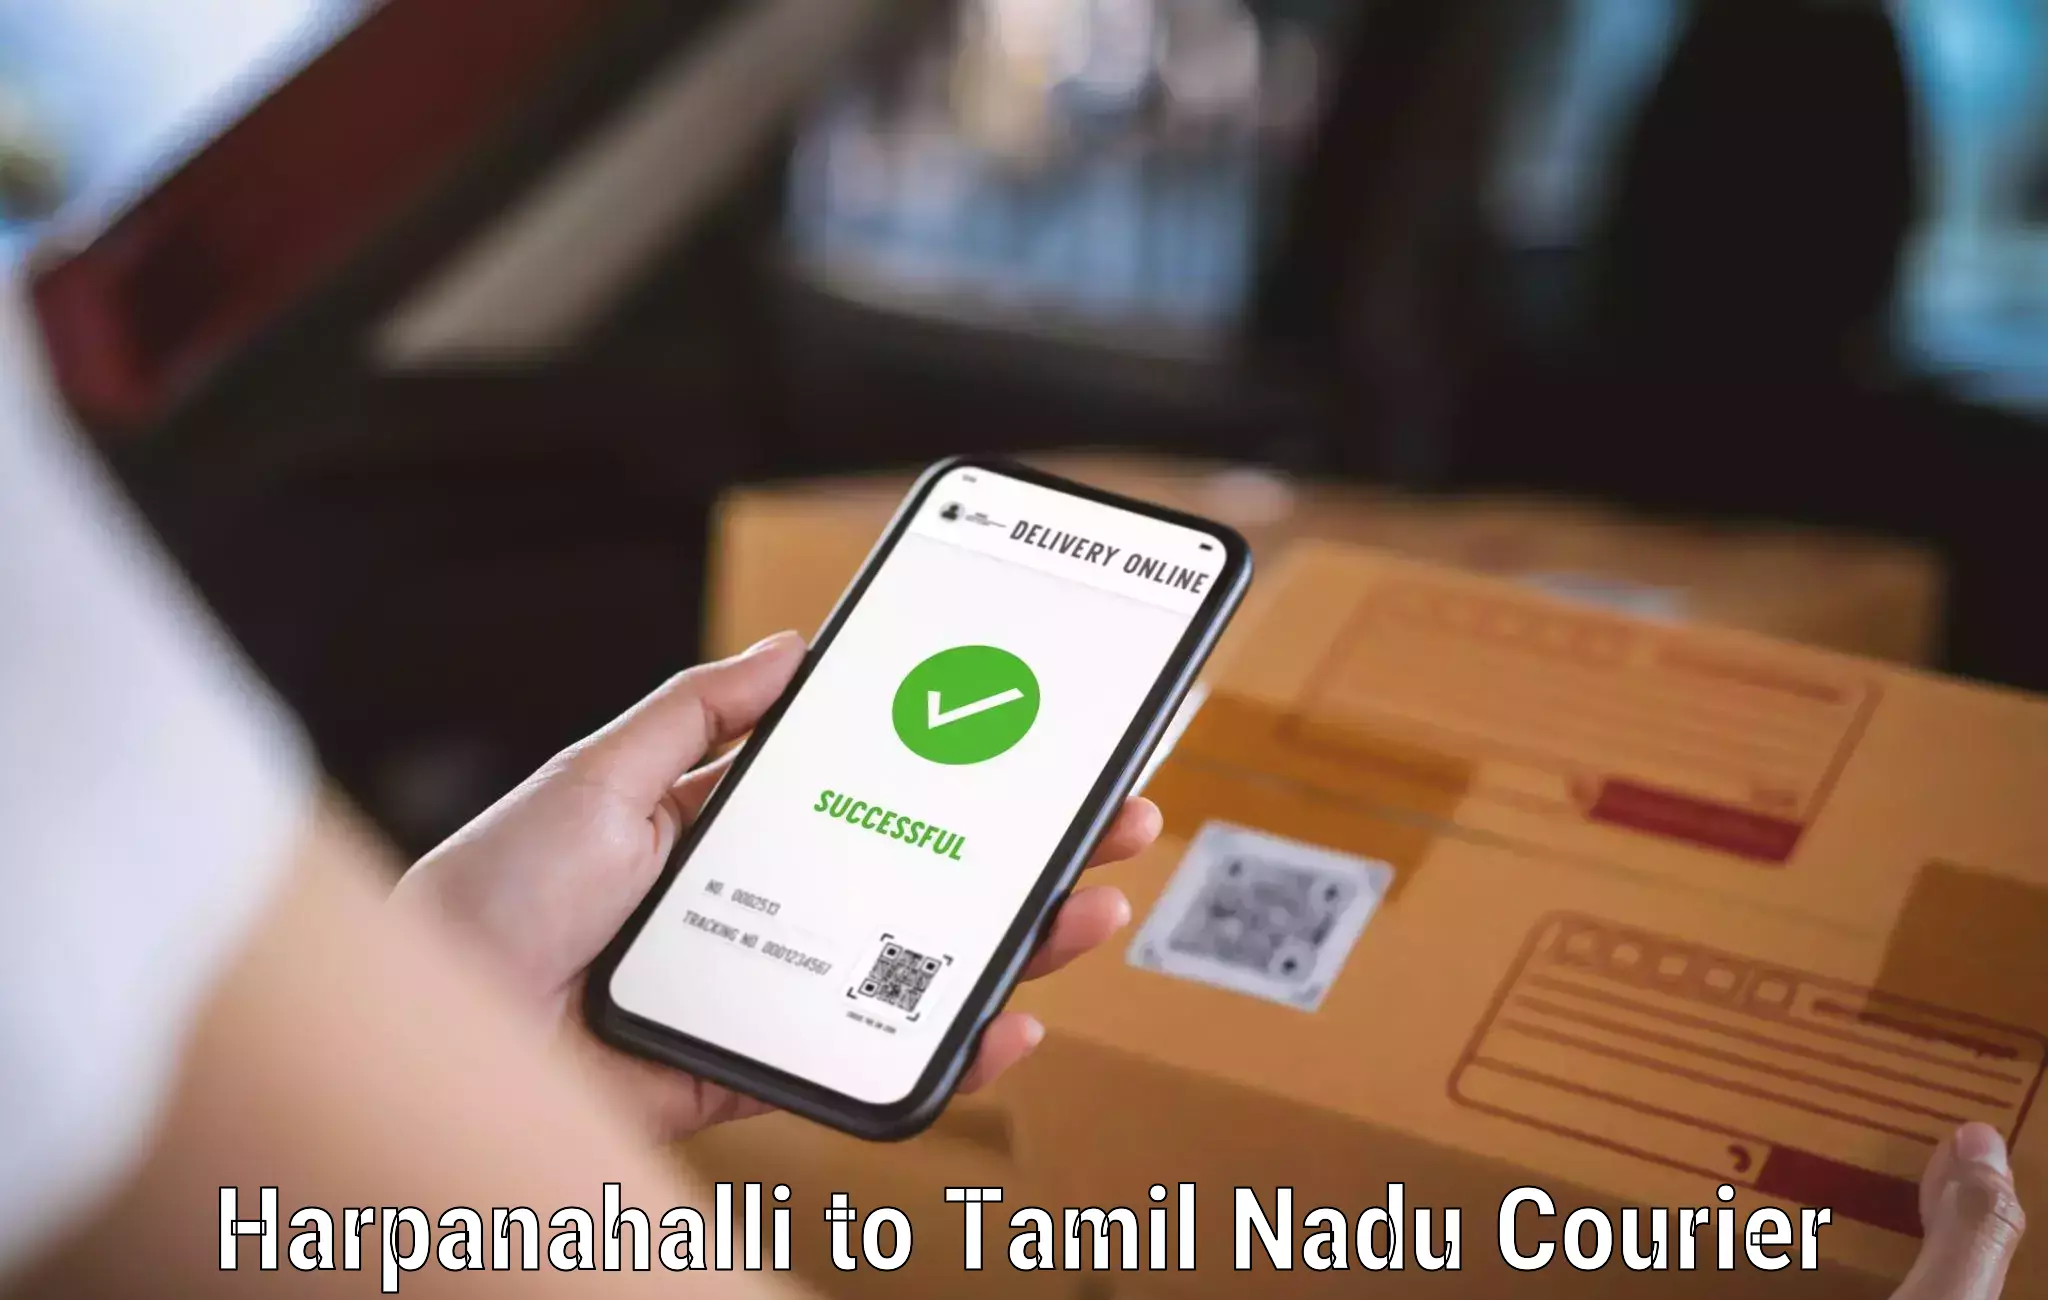 Courier service booking Harpanahalli to Arani